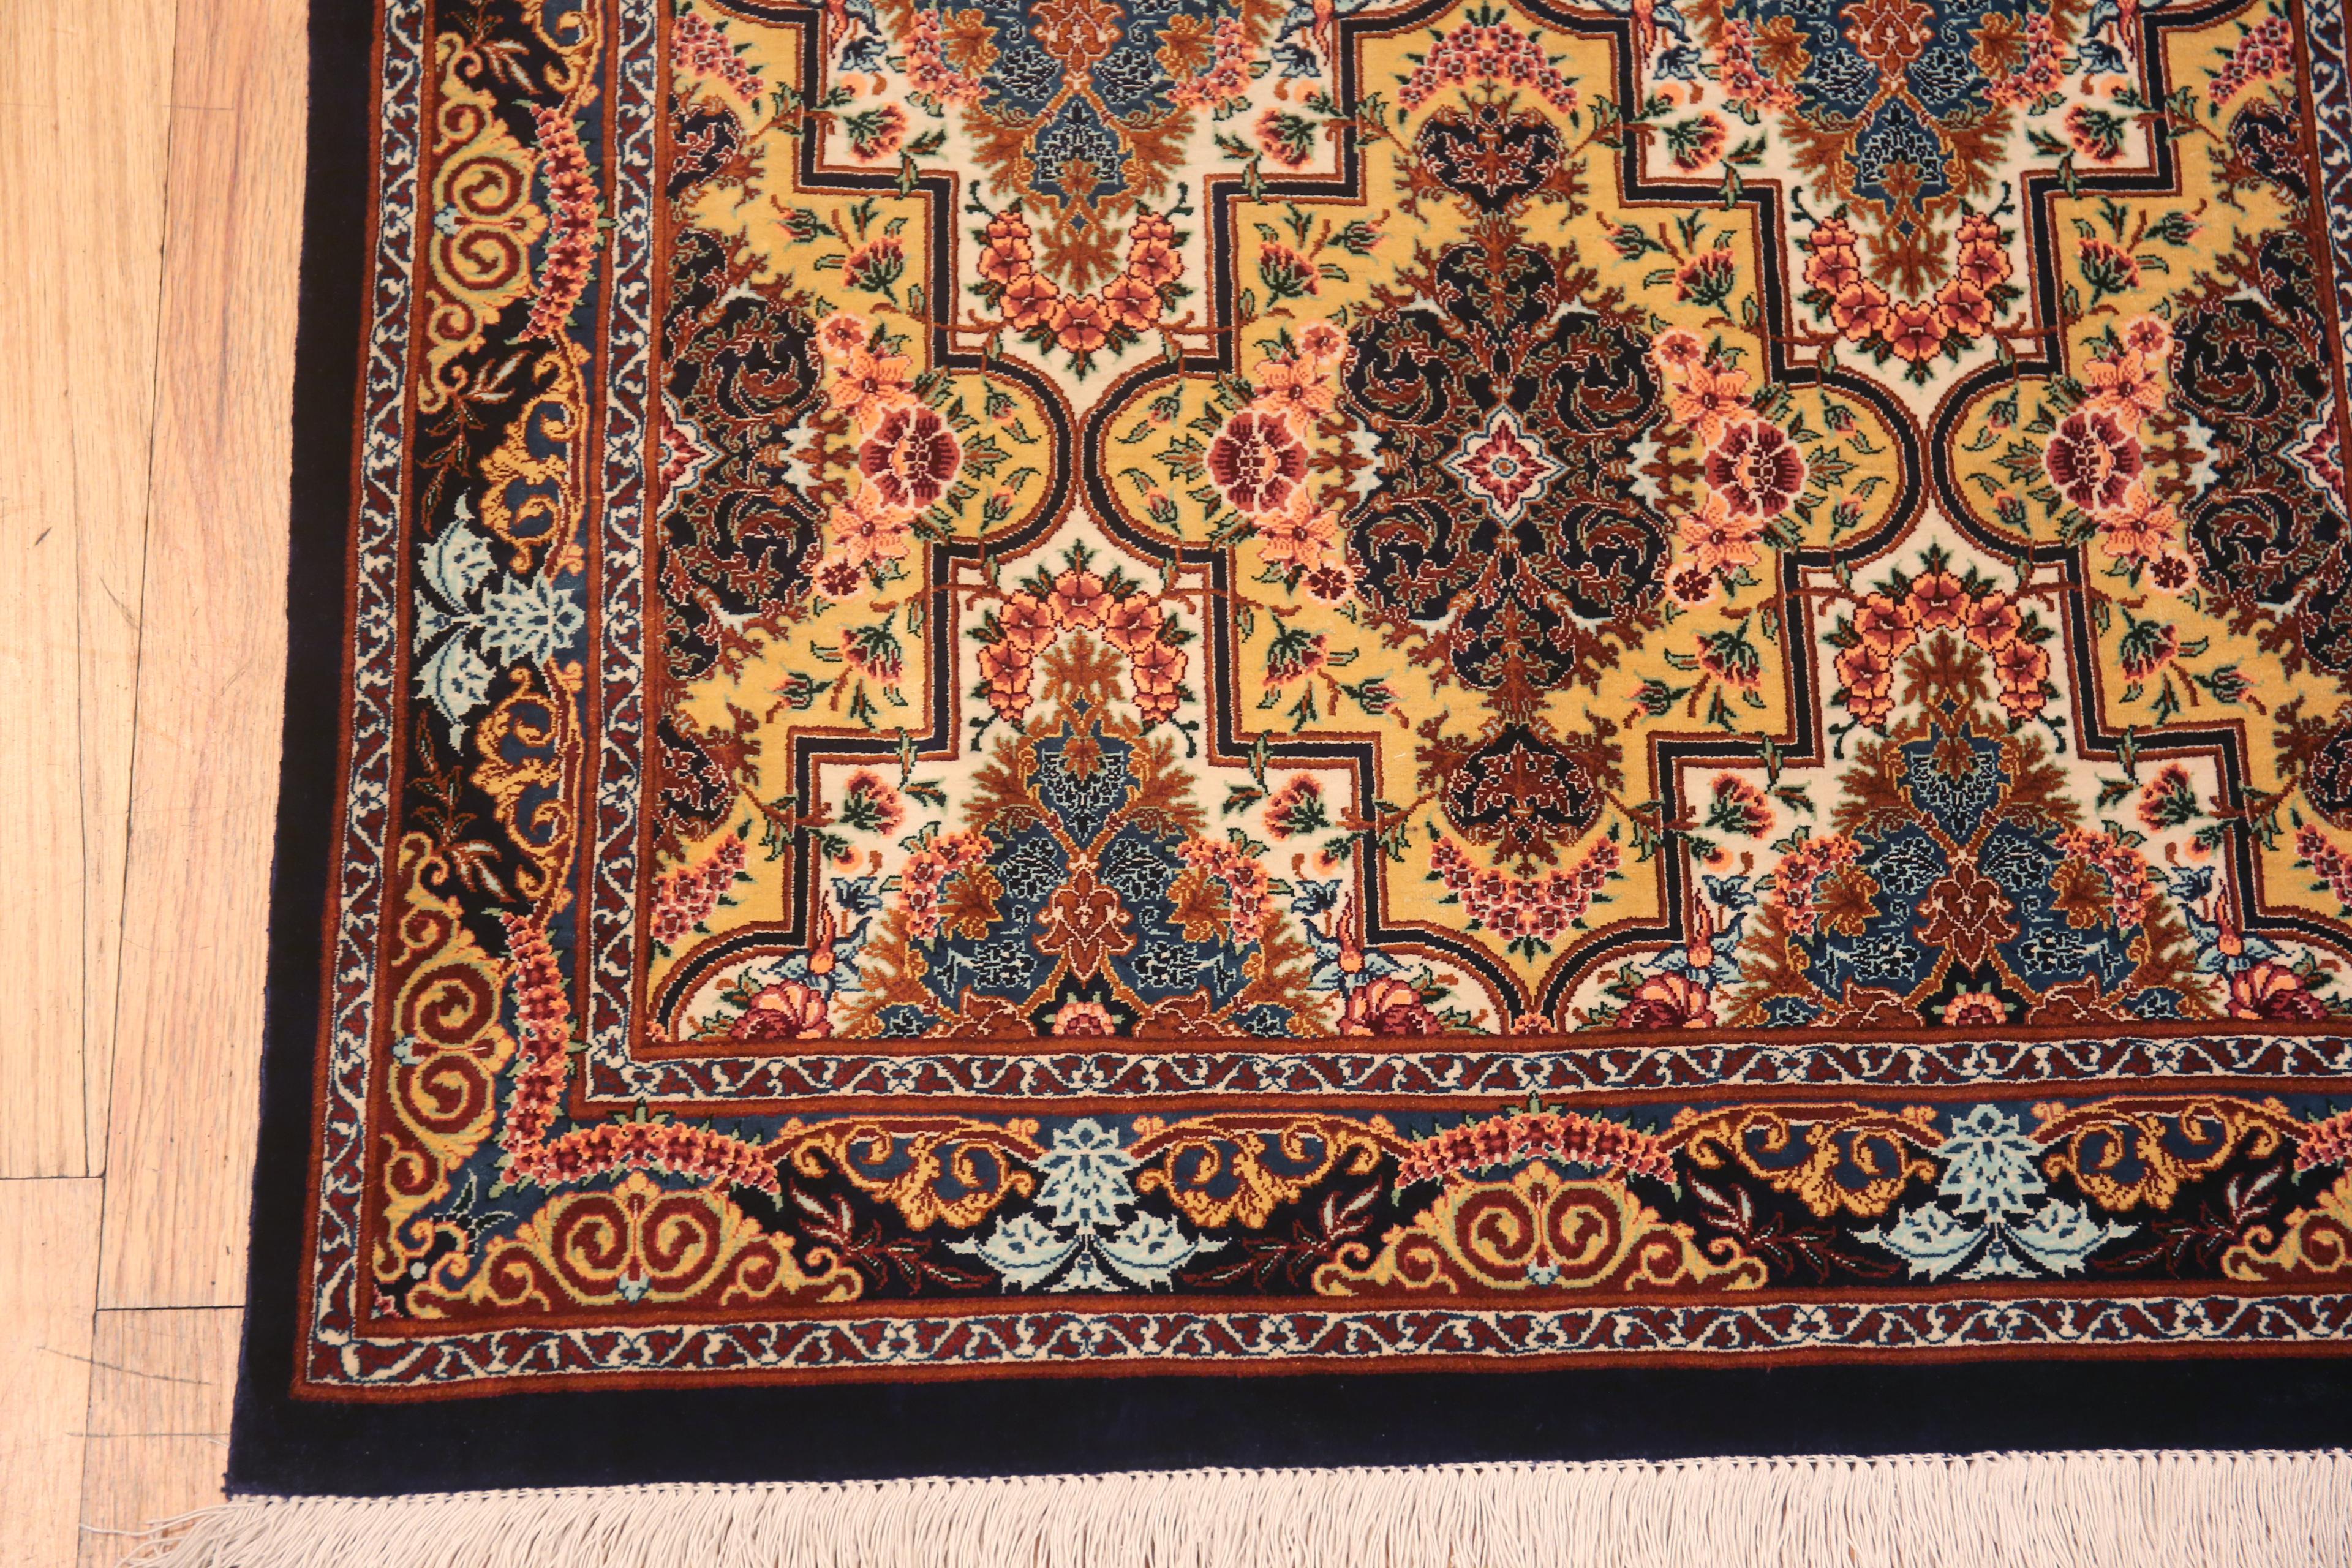 20th Century Intricate Fine Luxurious Persian Qum Silk Hallway Runner Rug 2'7